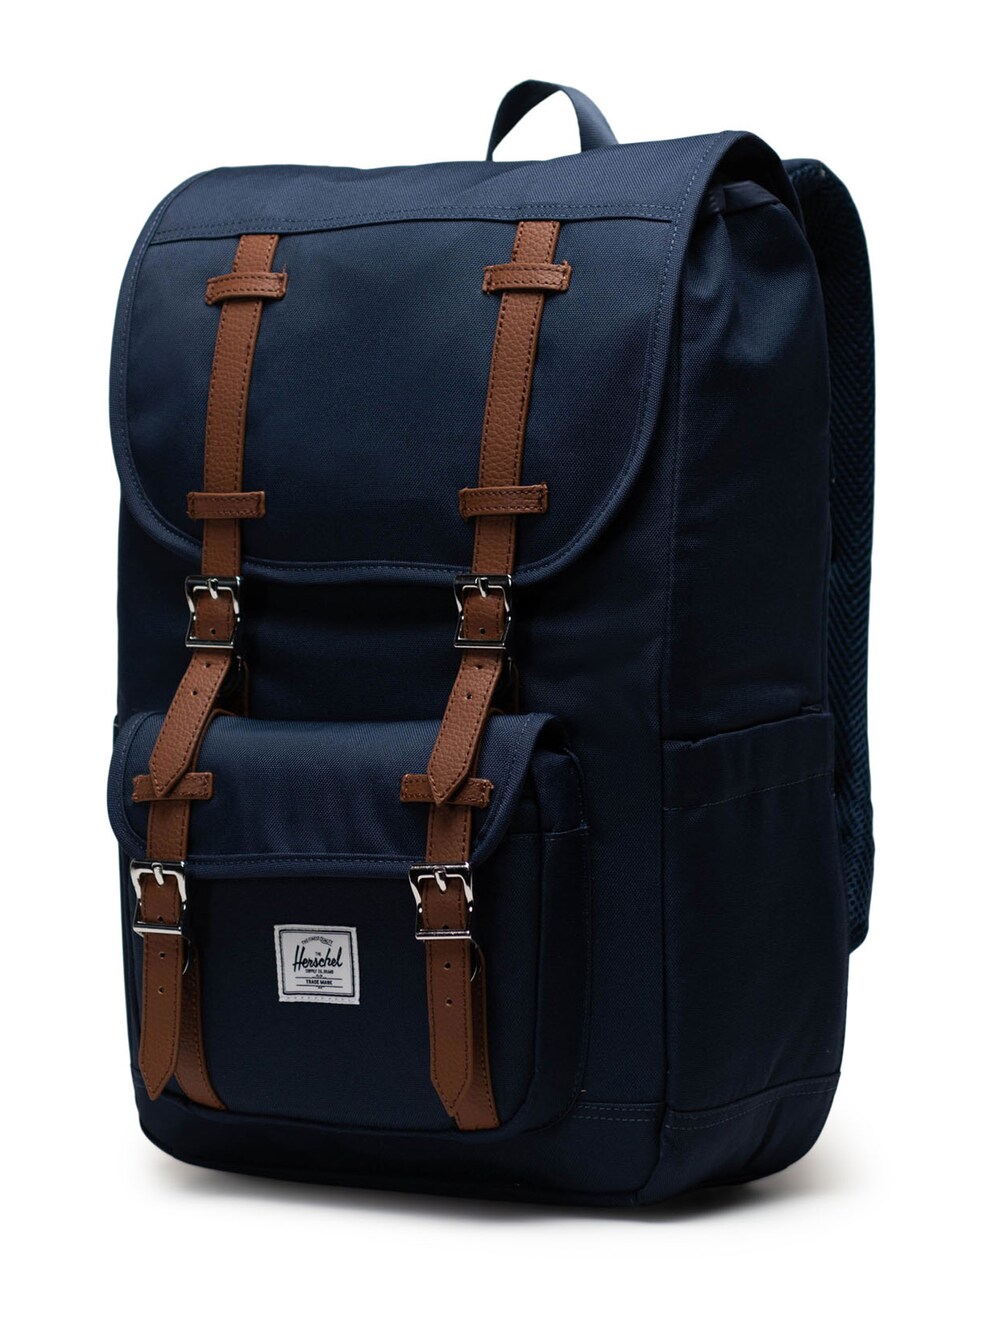 Рюкзак Herschel Little America, темно-синий рюкзак little america для планшета 15 единый размер синий